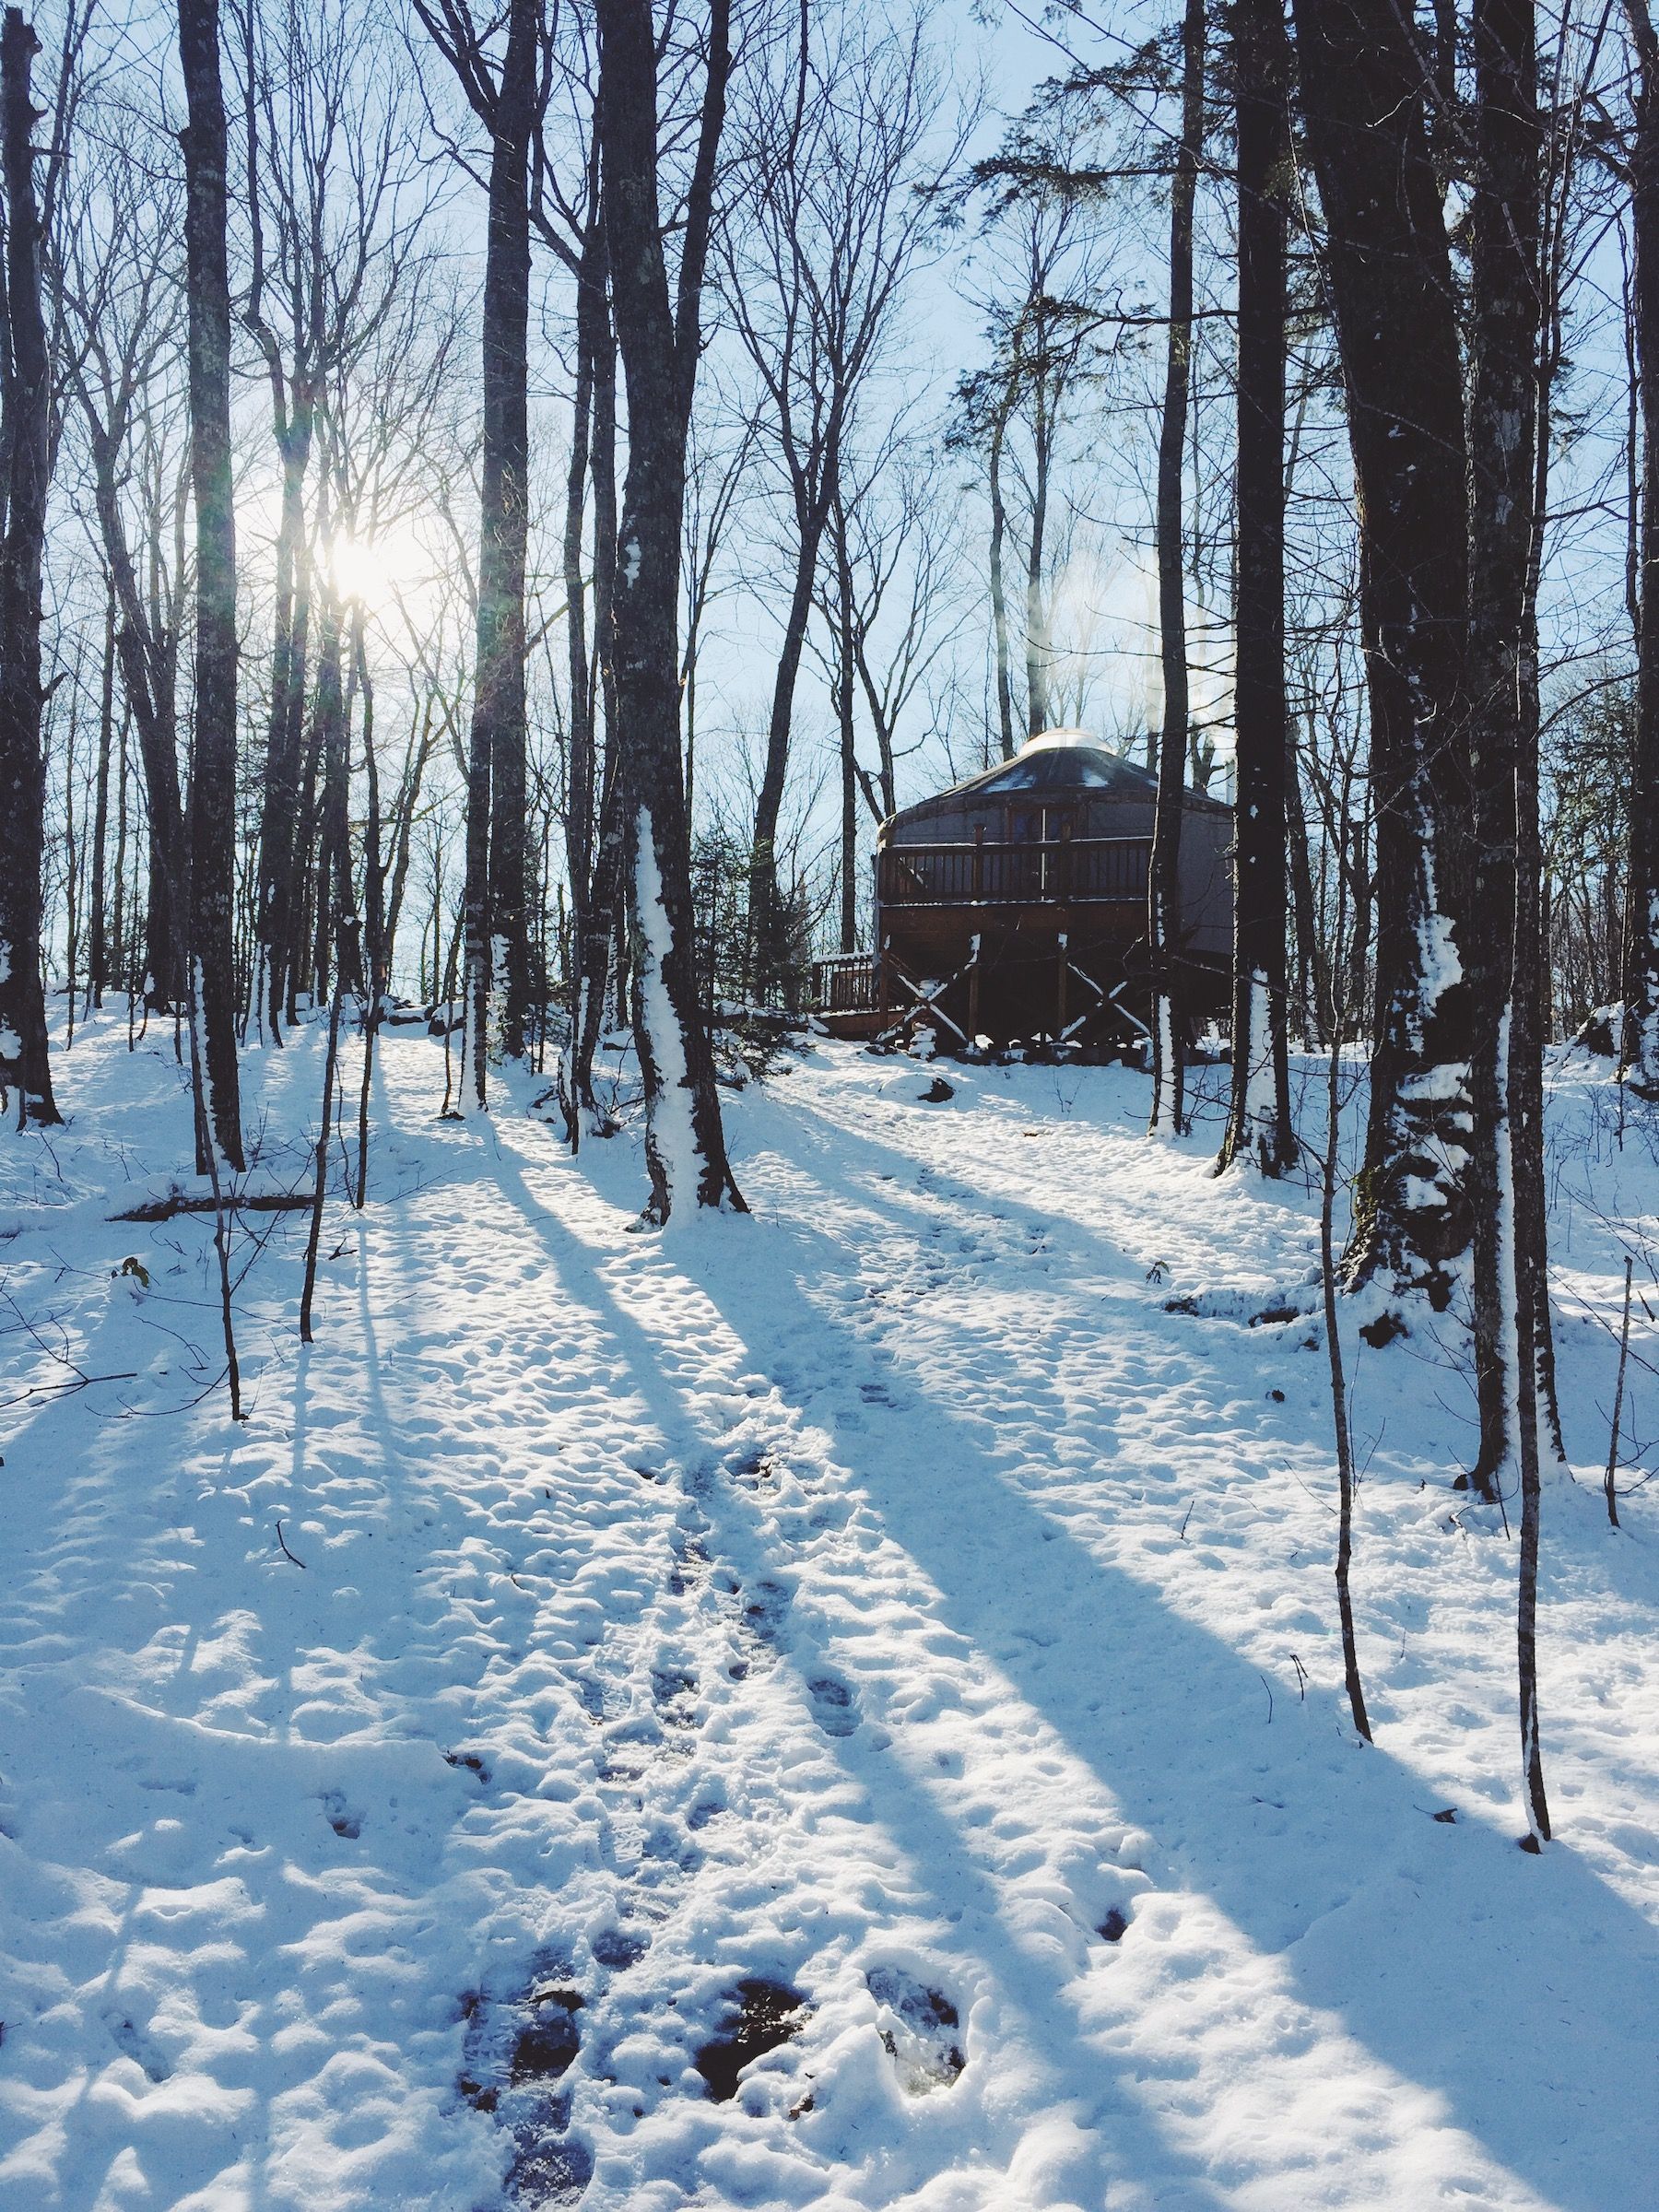 Snowy sunlit woods. Yurt and barren trees, throwing shadows toward camera.